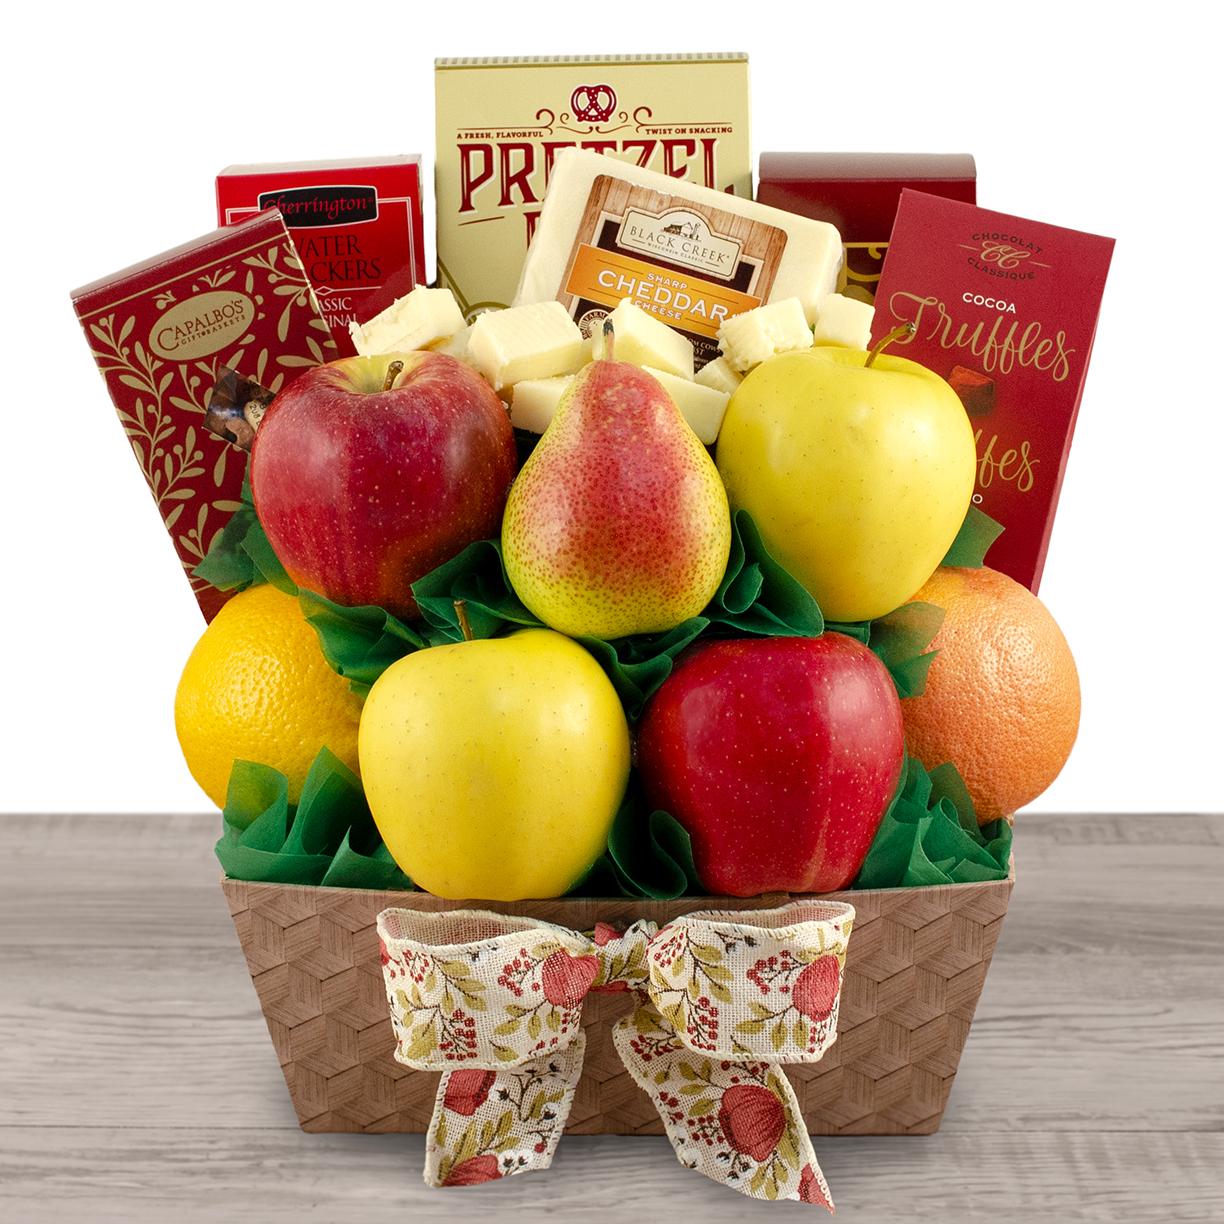 Harvest Bounty Fruit Gift Basket By Capalbo's Gift Baskets , Fruit Gift Baskets , Gift Baskets Delivered